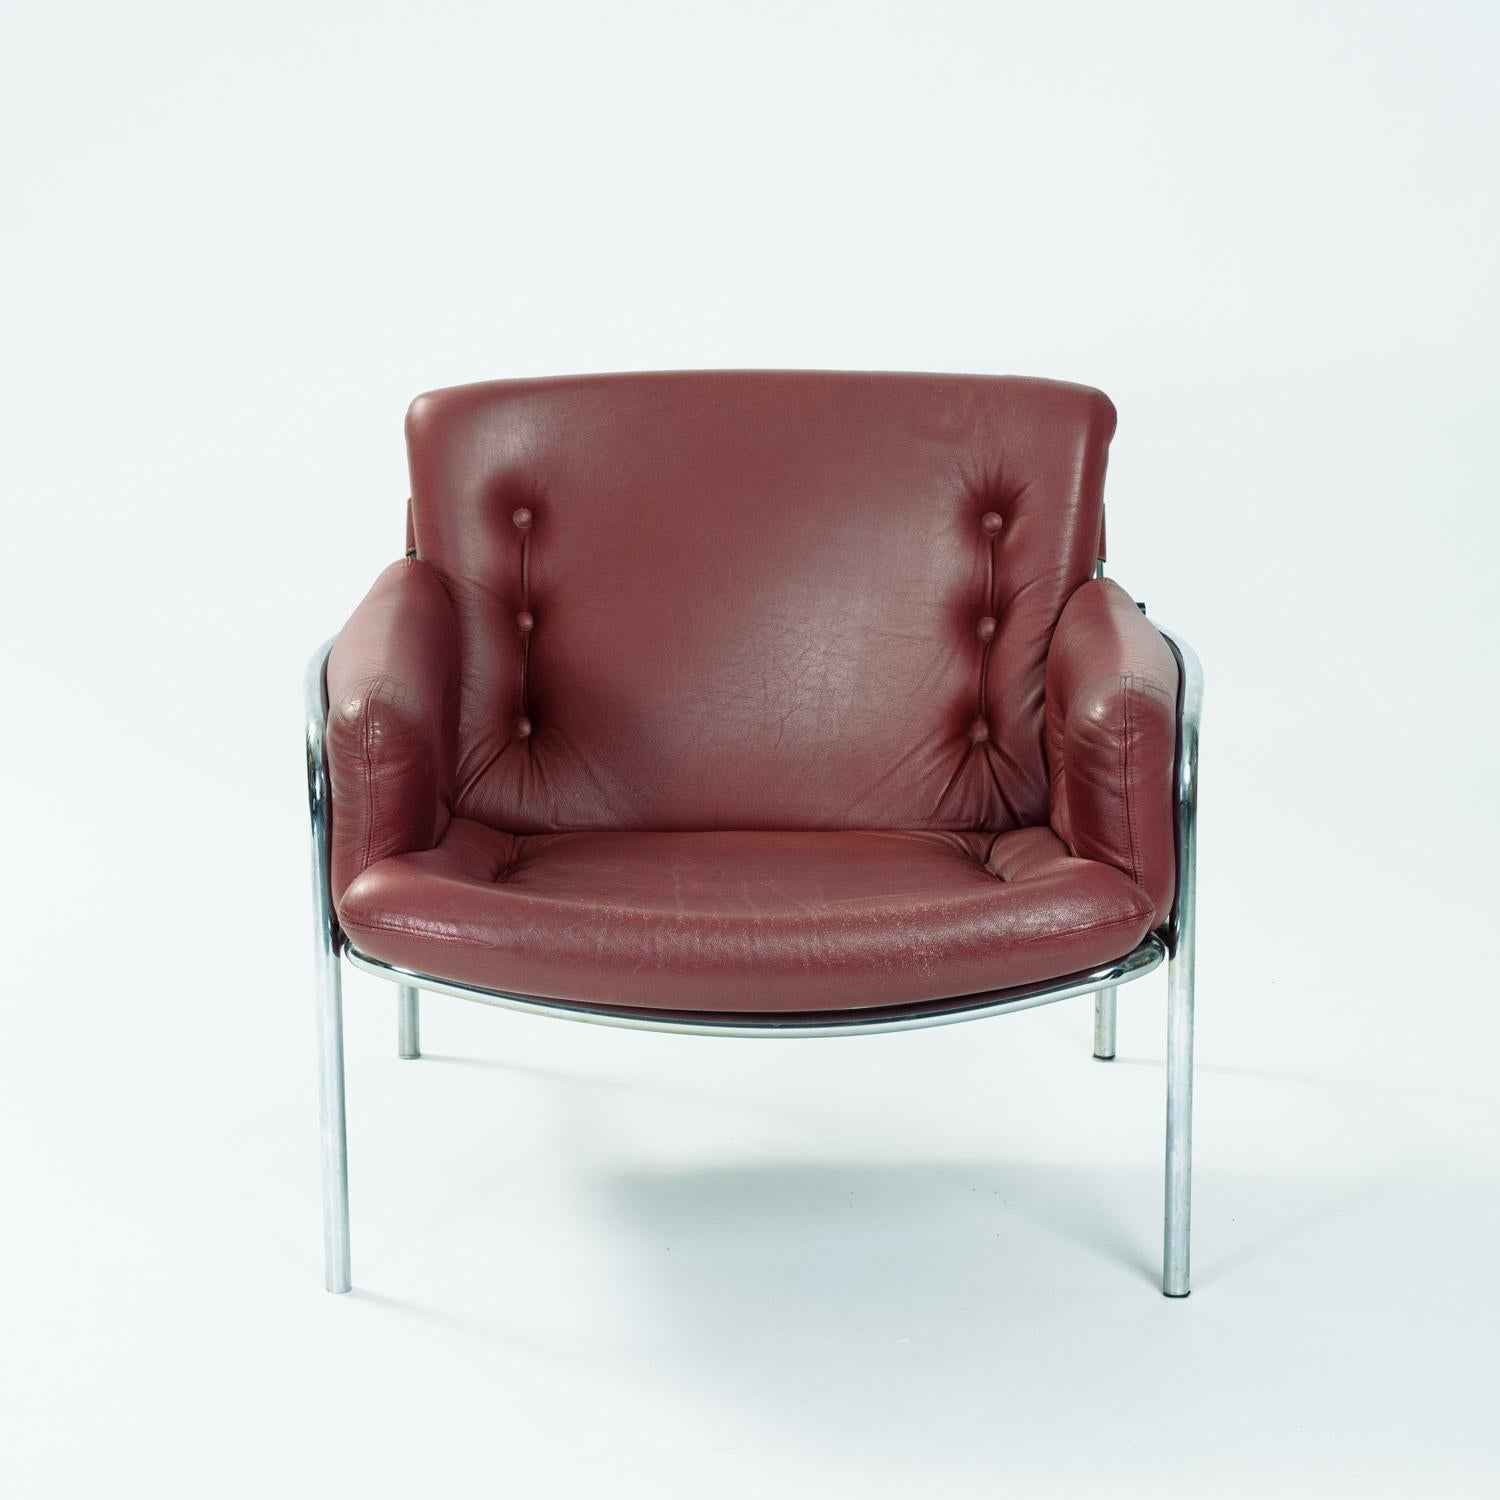 Dutch Martin Visser Osaka burgundy leather lounge chair by 't Spectrum, 1964 For Sale 5